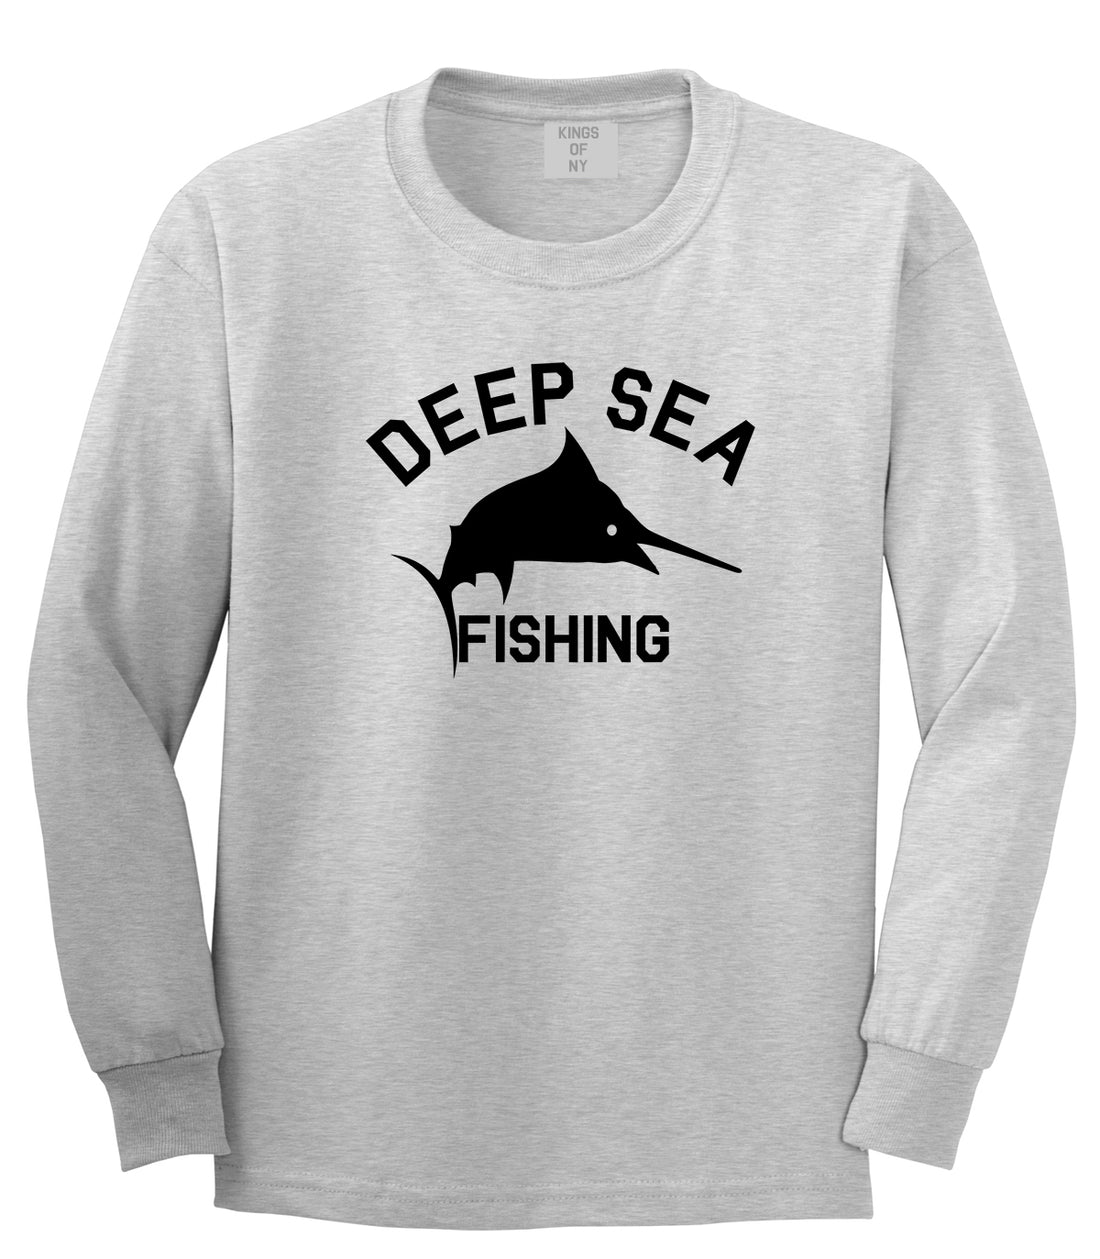 Deep Sea Fishing Mens Long Sleeve T-Shirt by Kings of NY Black / Small